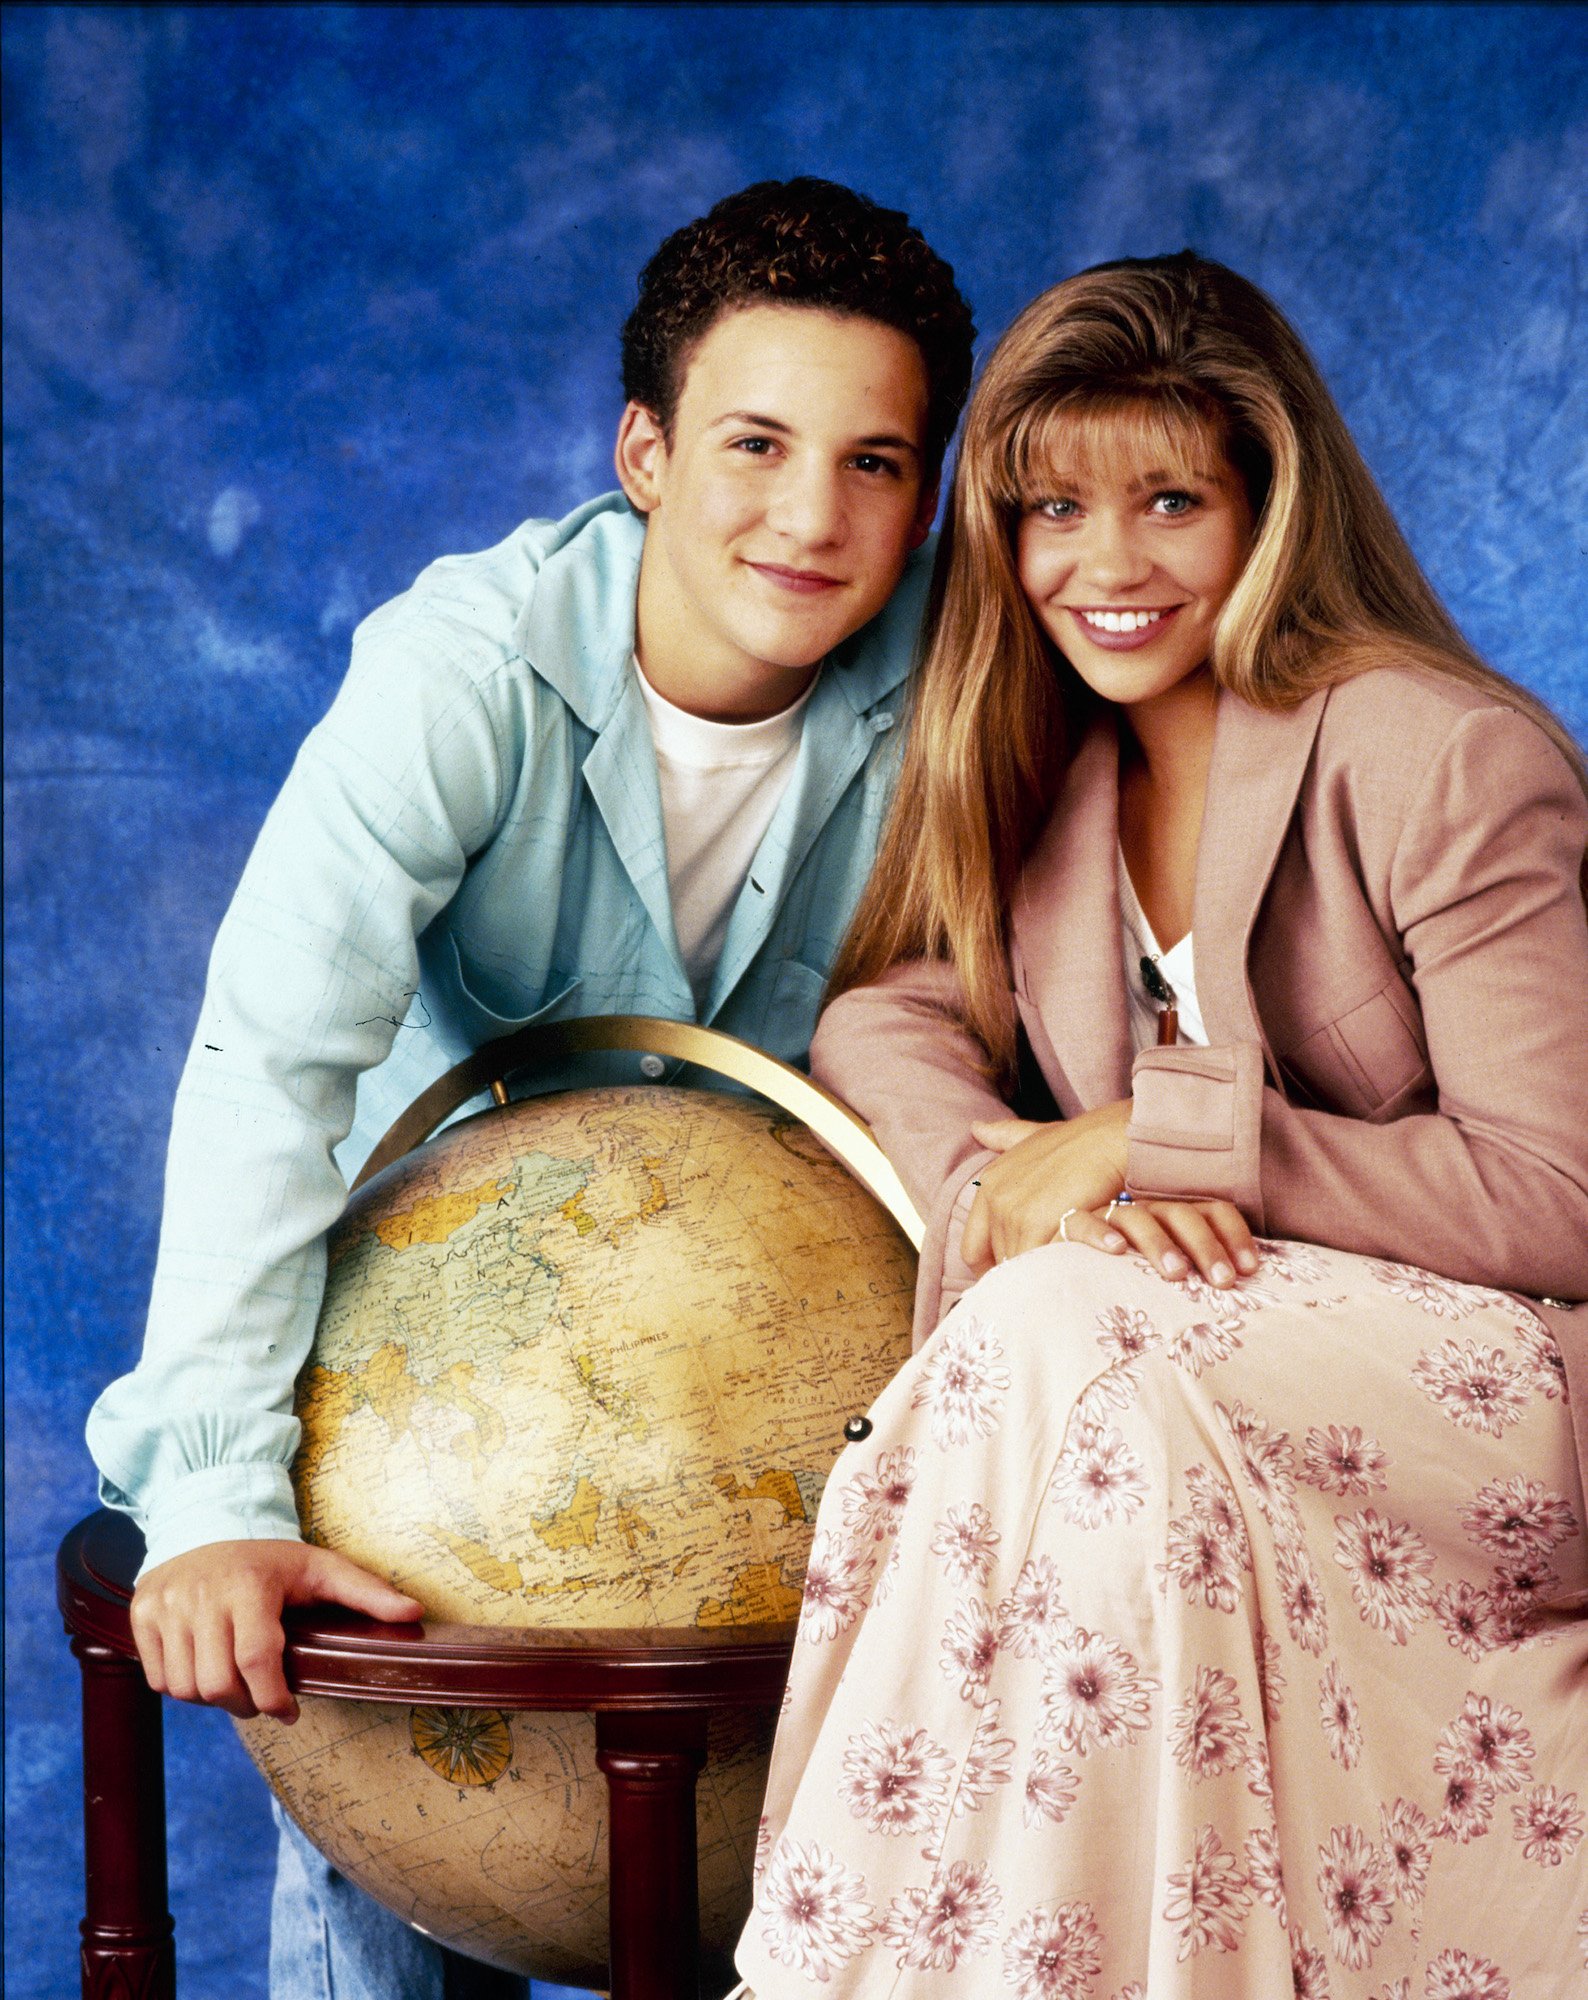 (L-R) Ben Savage as Corey Matthews and Danielle Fishel as Topanga Lawrence, standing near a globe